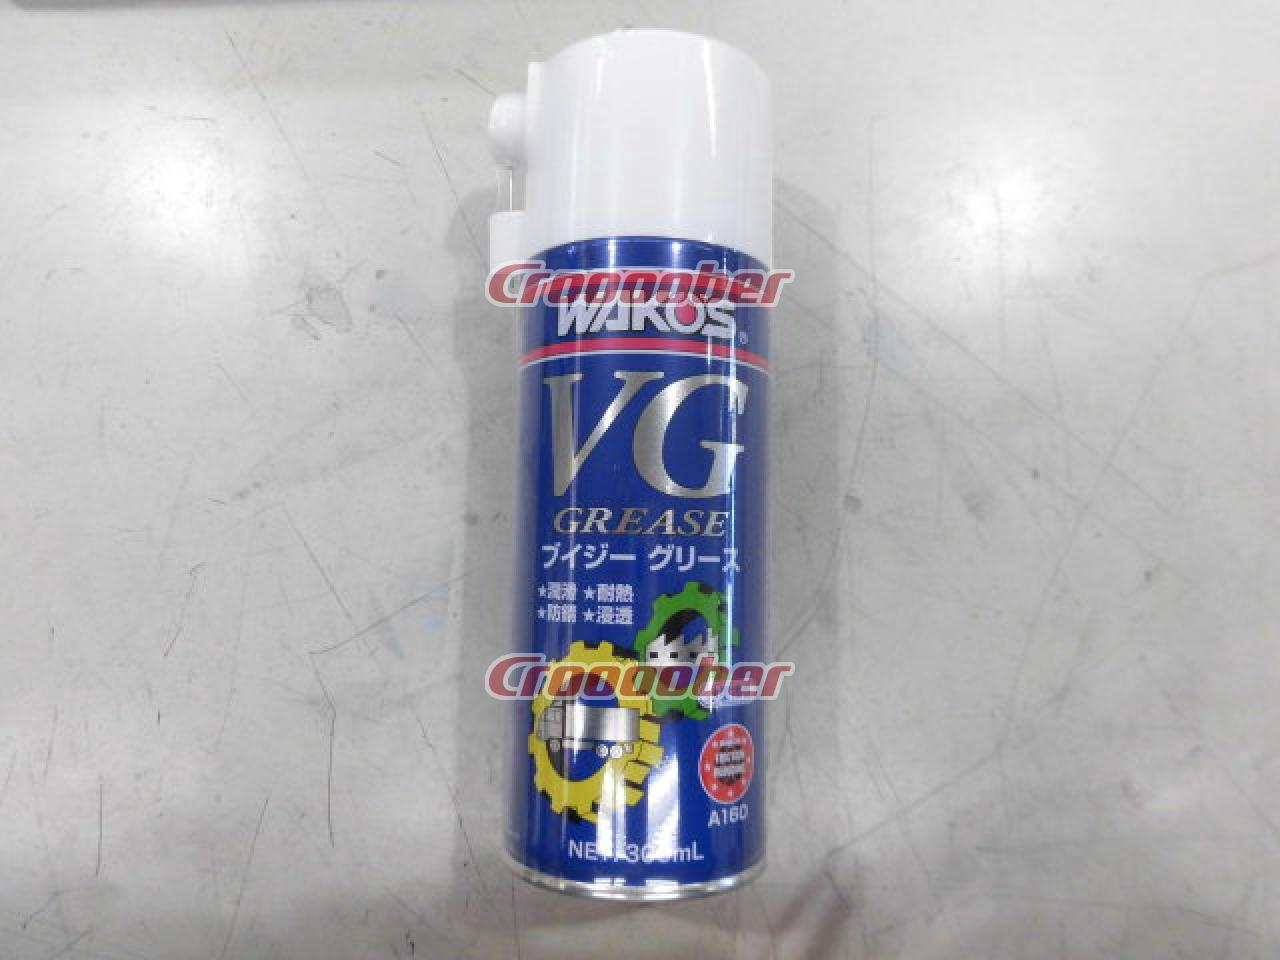 WAKO'S(ワコーズ) VG GREASE(ブイジーグリース) 潤滑剤 A160 